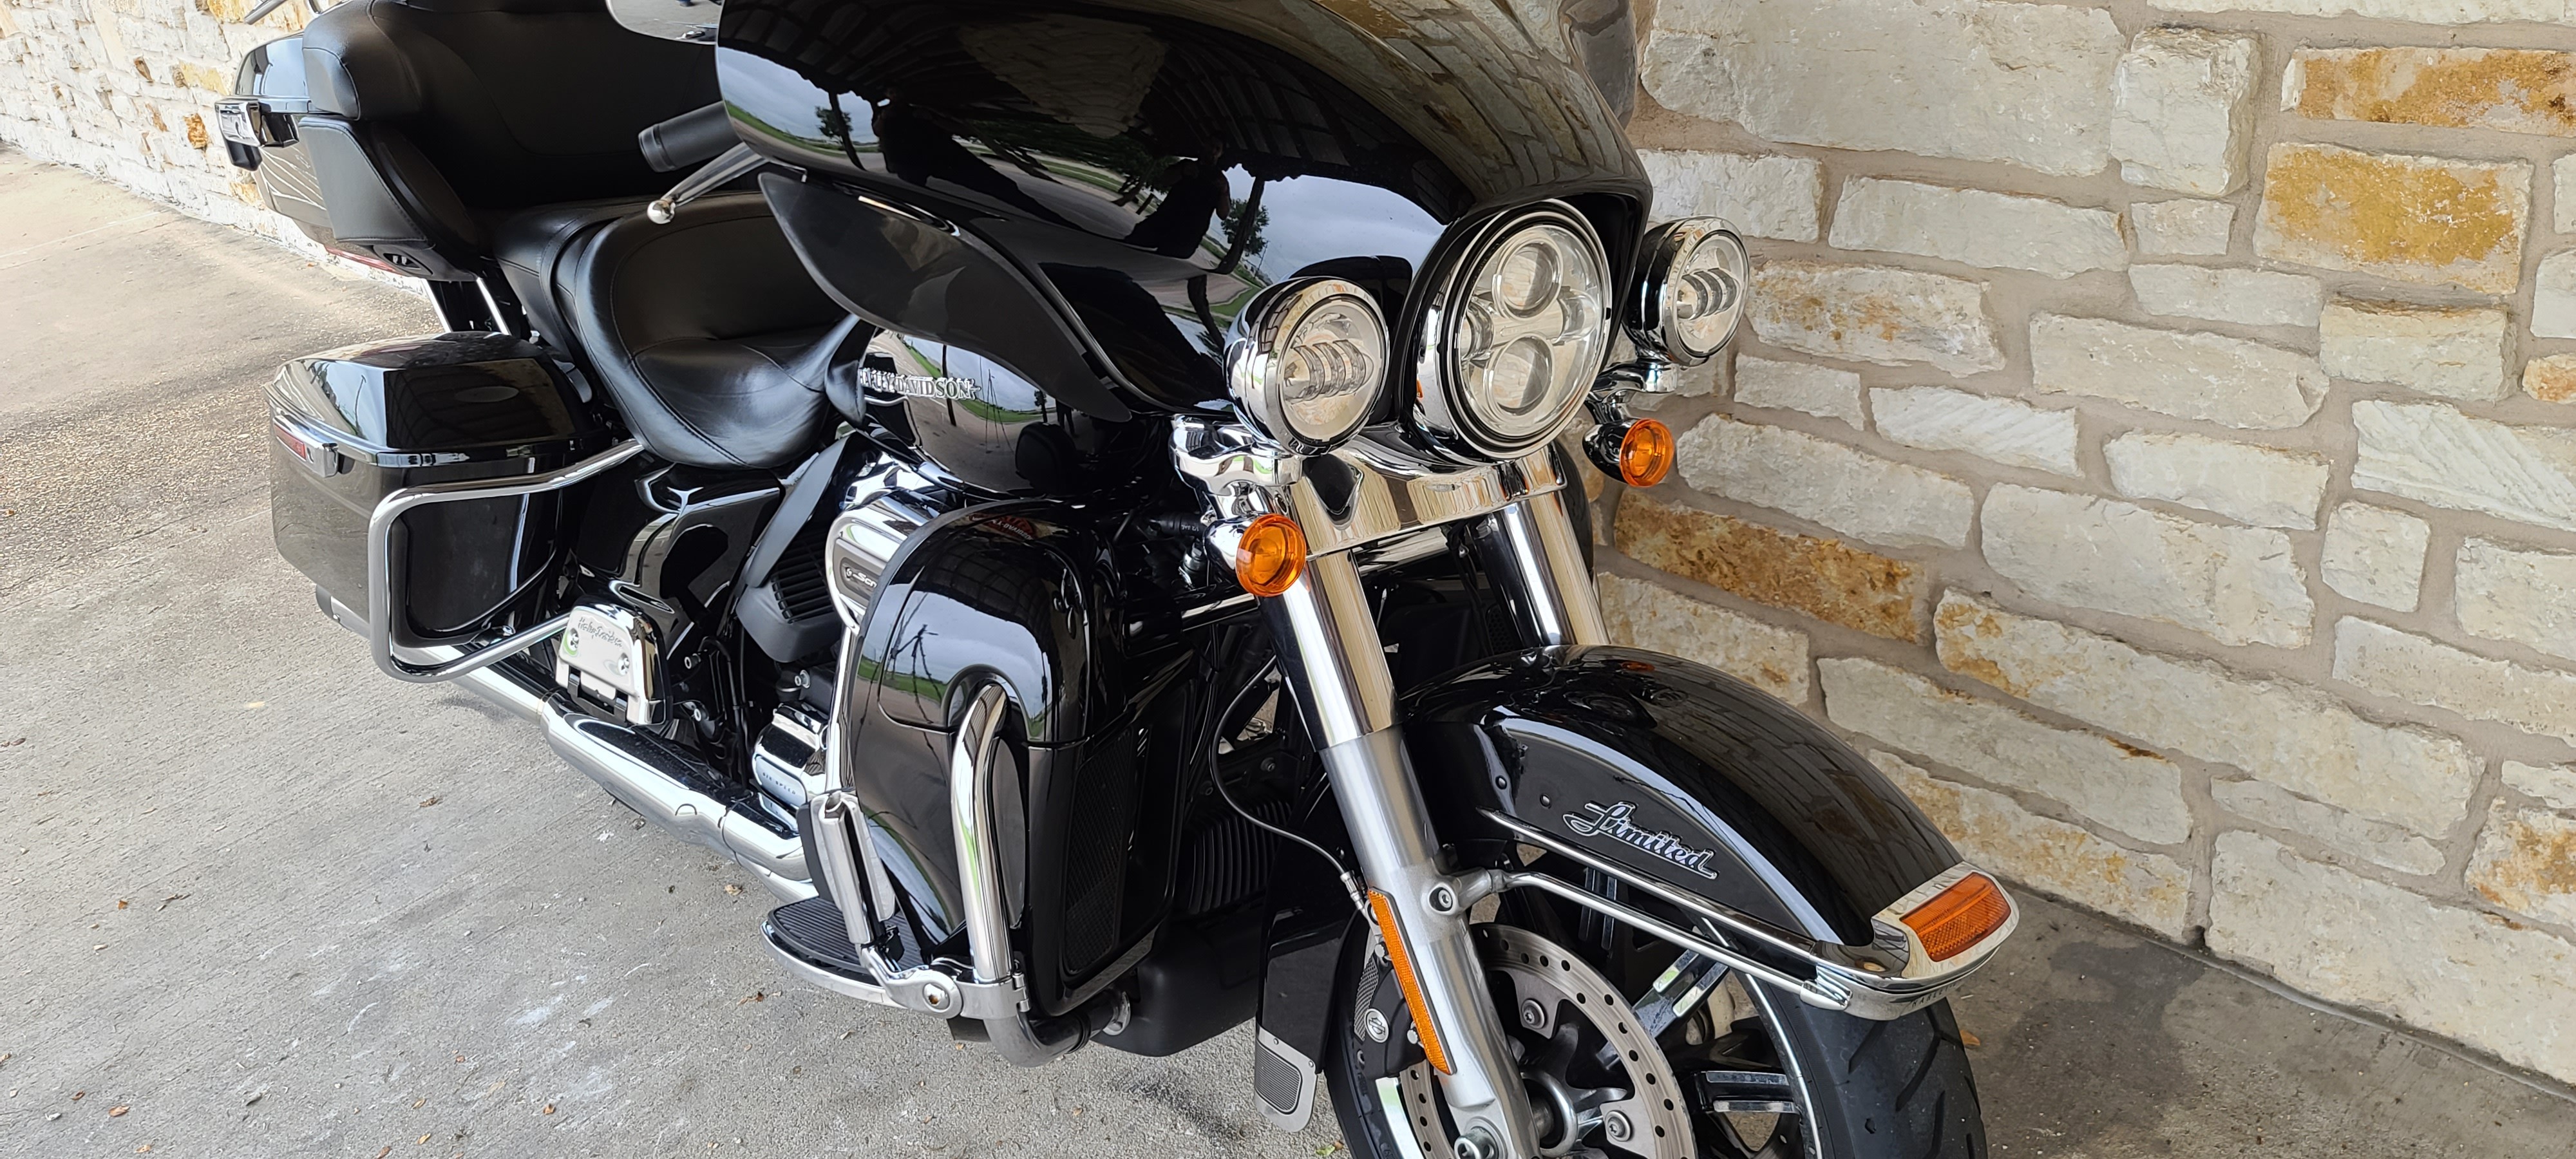 2018 Harley-Davidson Electra Glide Ultra Limited at Harley-Davidson of Waco